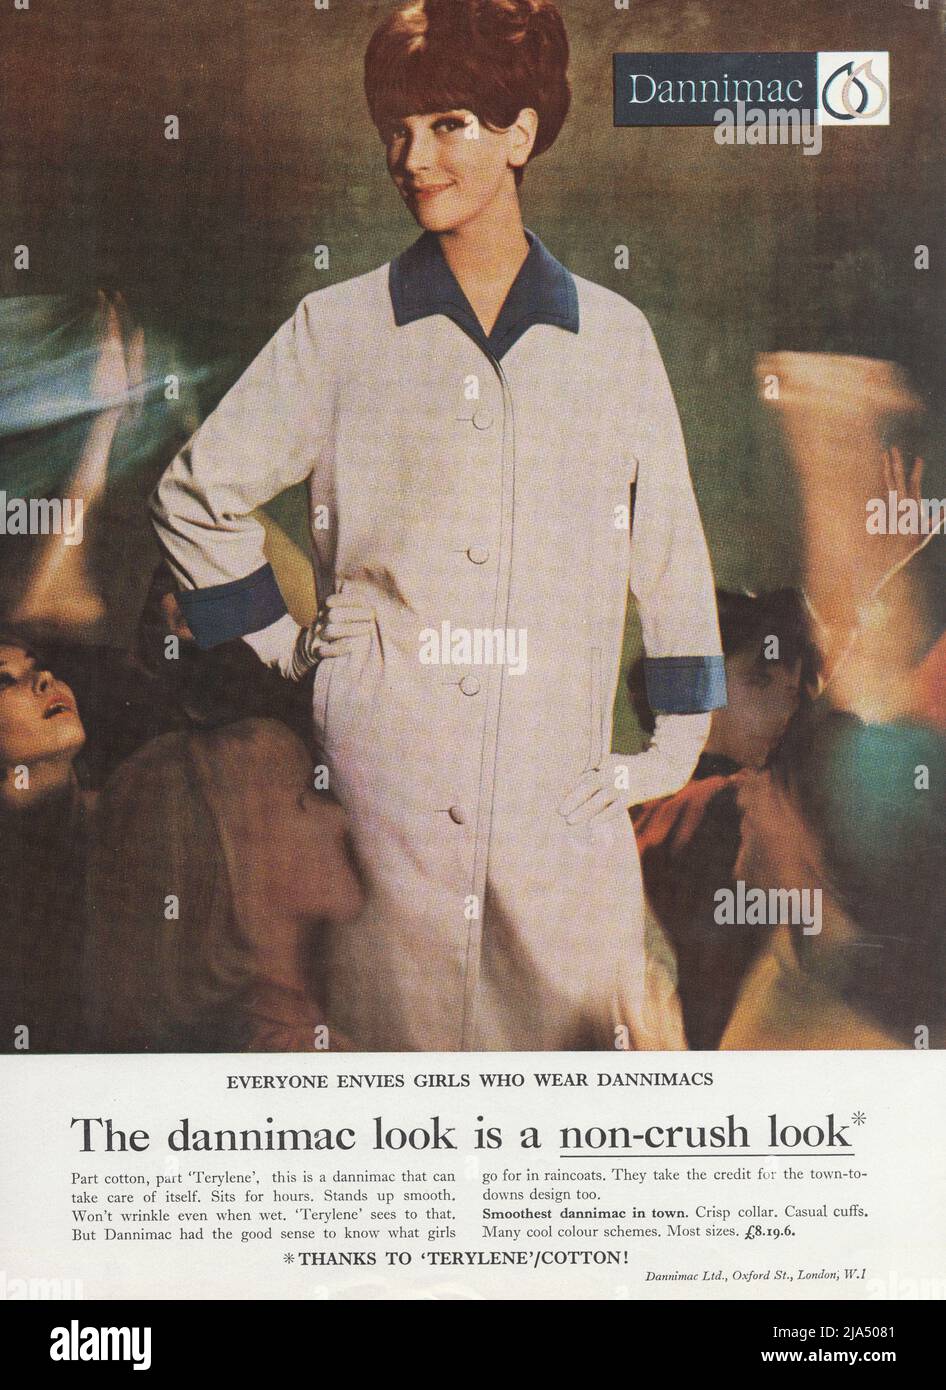 Dannimac Ltd vintage paper advertisement advert 1960s 1970s. The dannimac look is a non-crush look Stock Photo